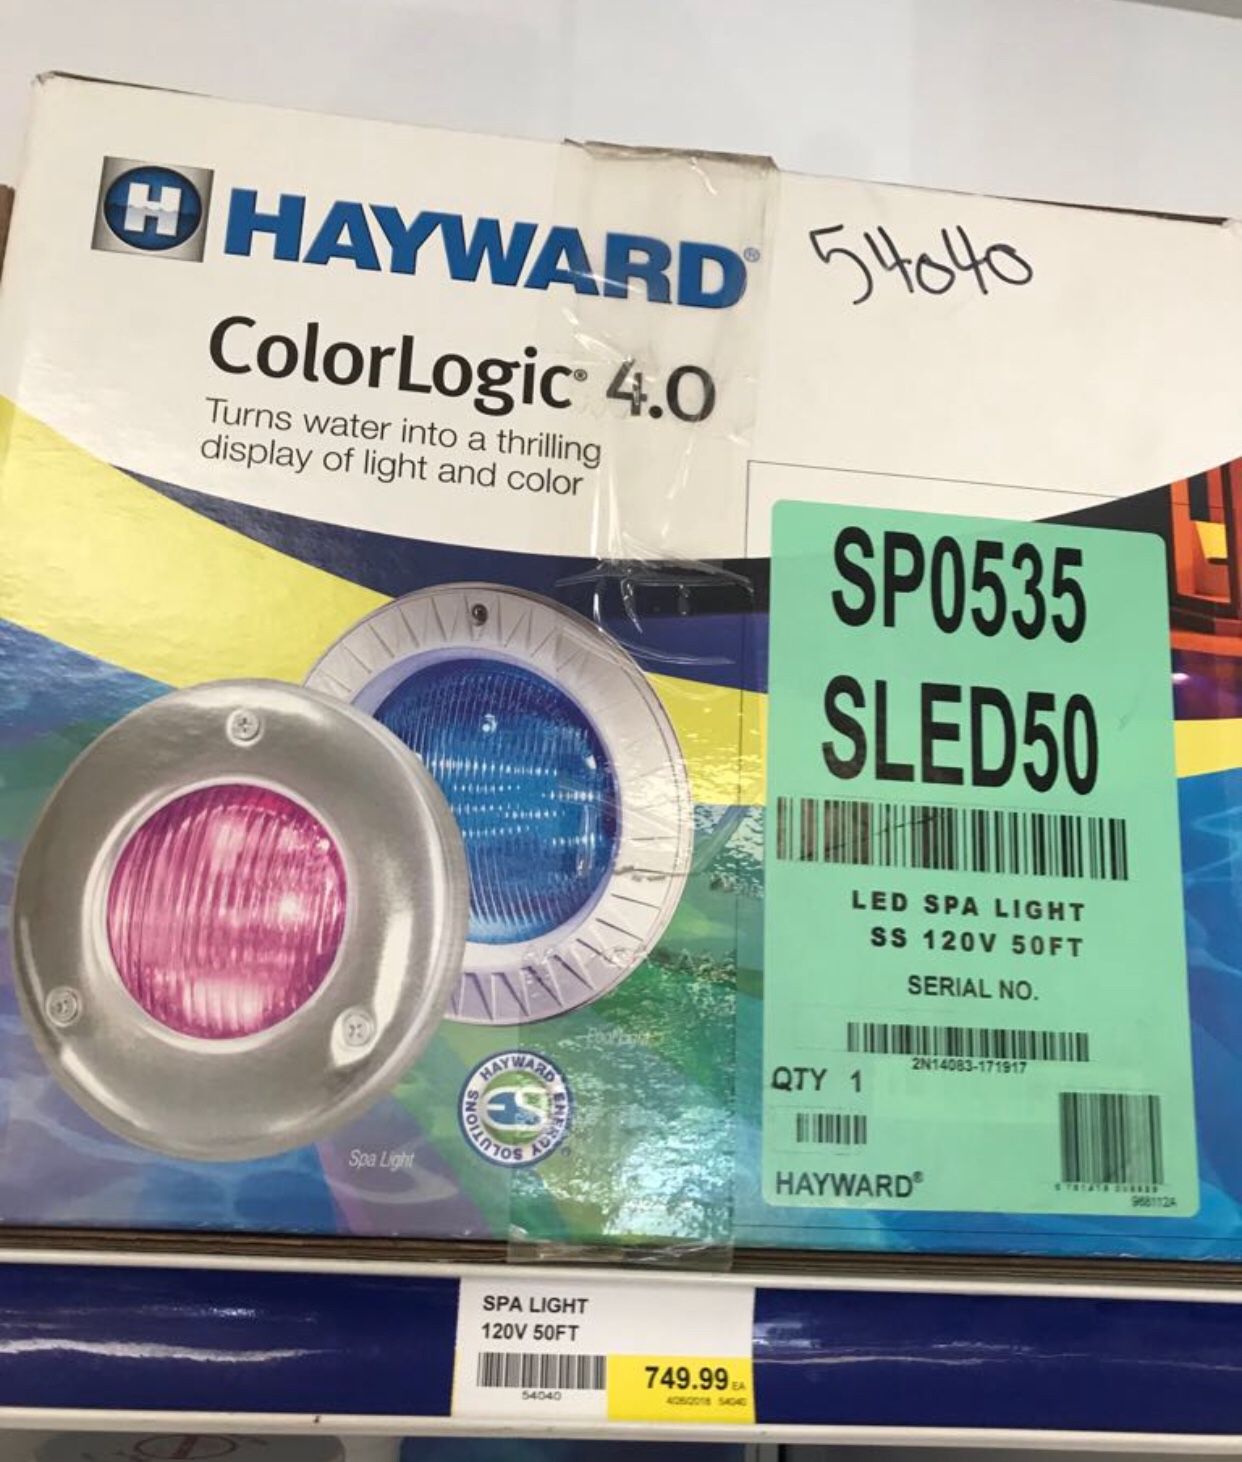 New Hayward colorlogic 4.0 spa pool light